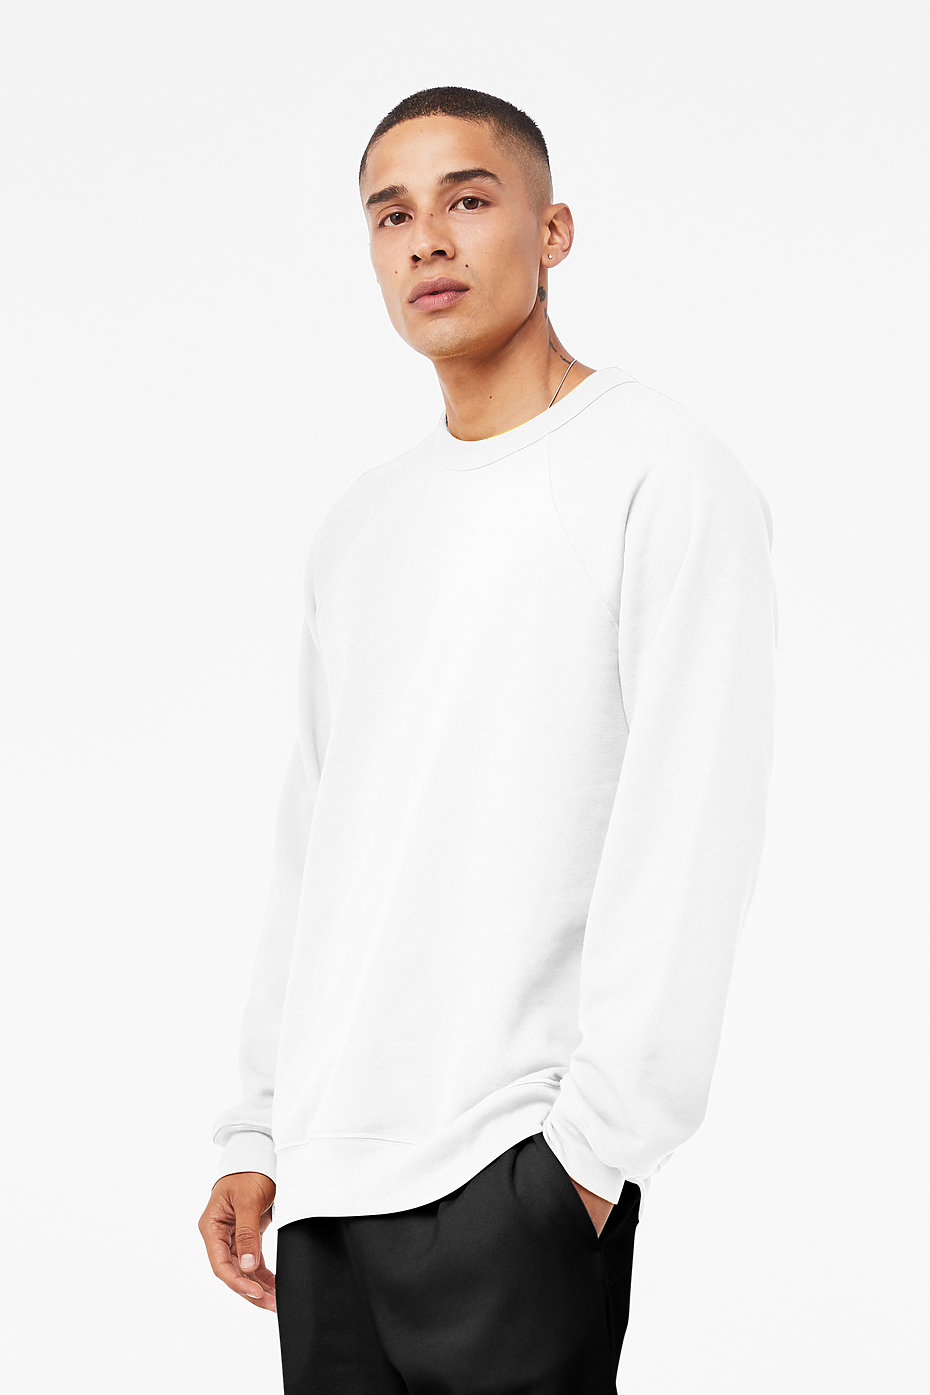 Custom Sweatshirts For Men | Wholesale Crewneck Sweatshirts 